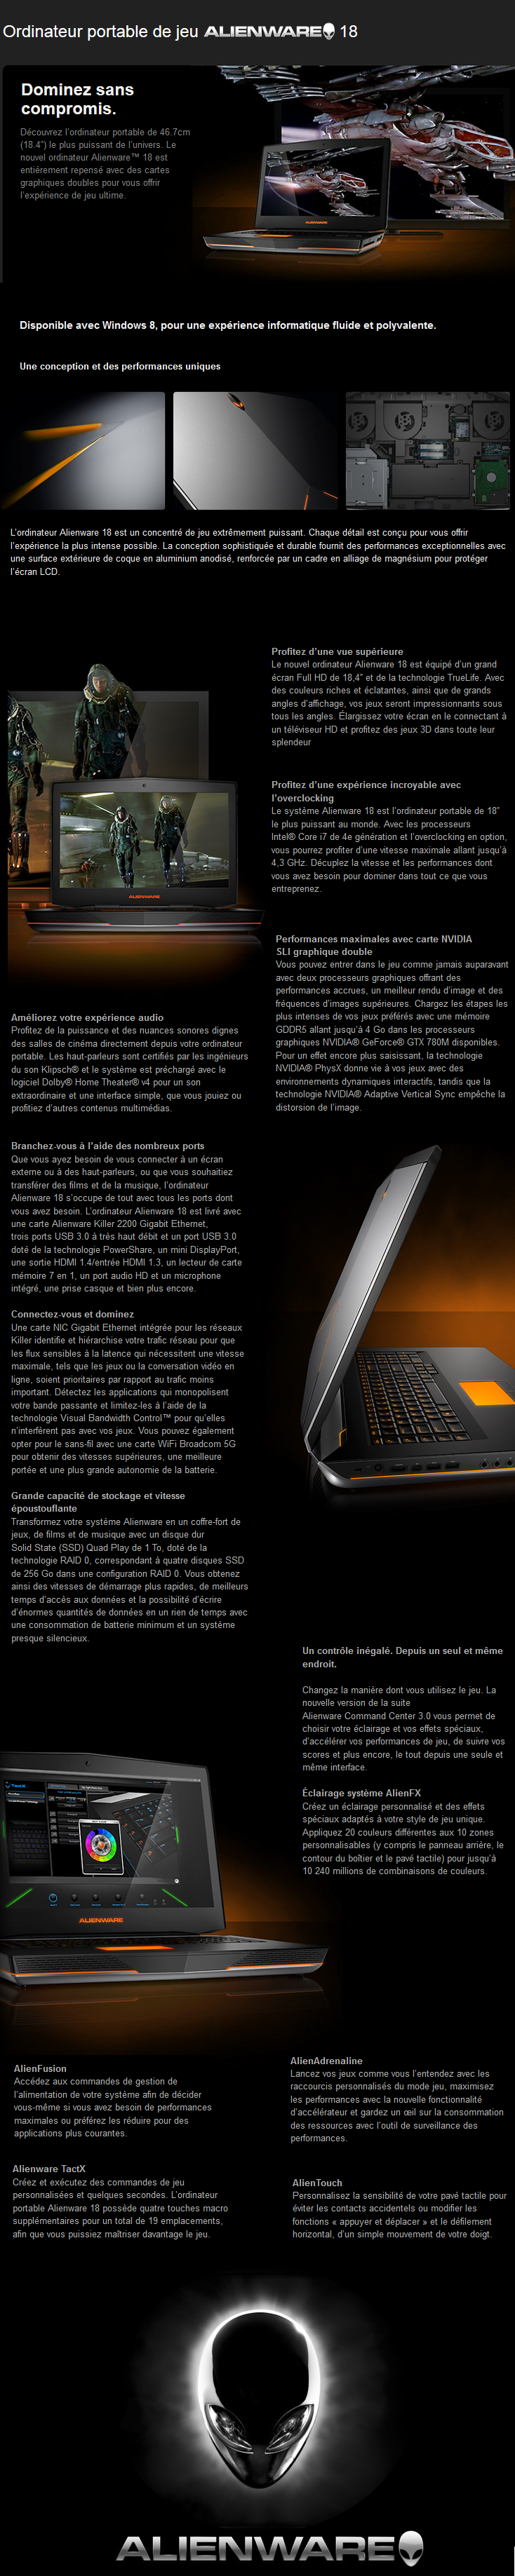 Acheter Alienware 18 Dell gaming laptop (ALIENW18-I7-4800QM) Maroc